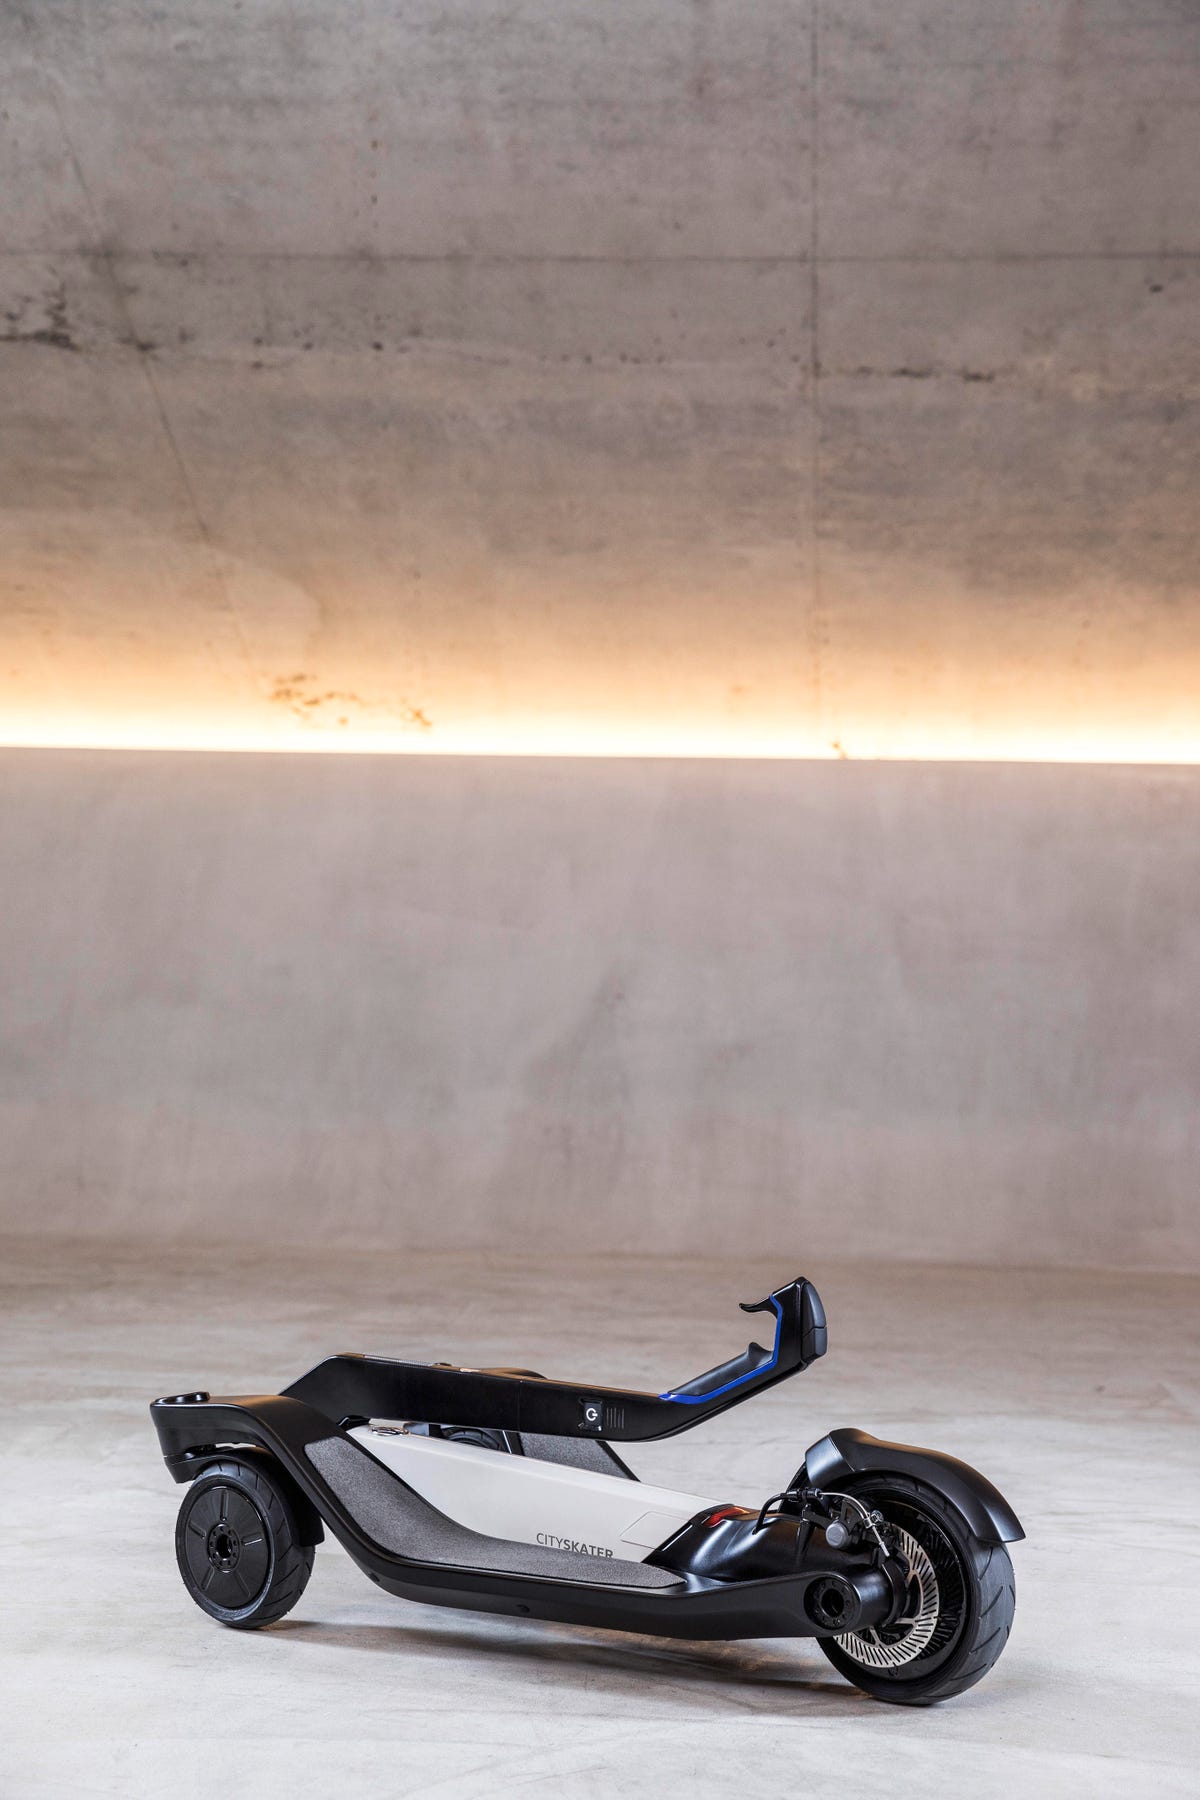 Volkswagen Cityskater concept scooter